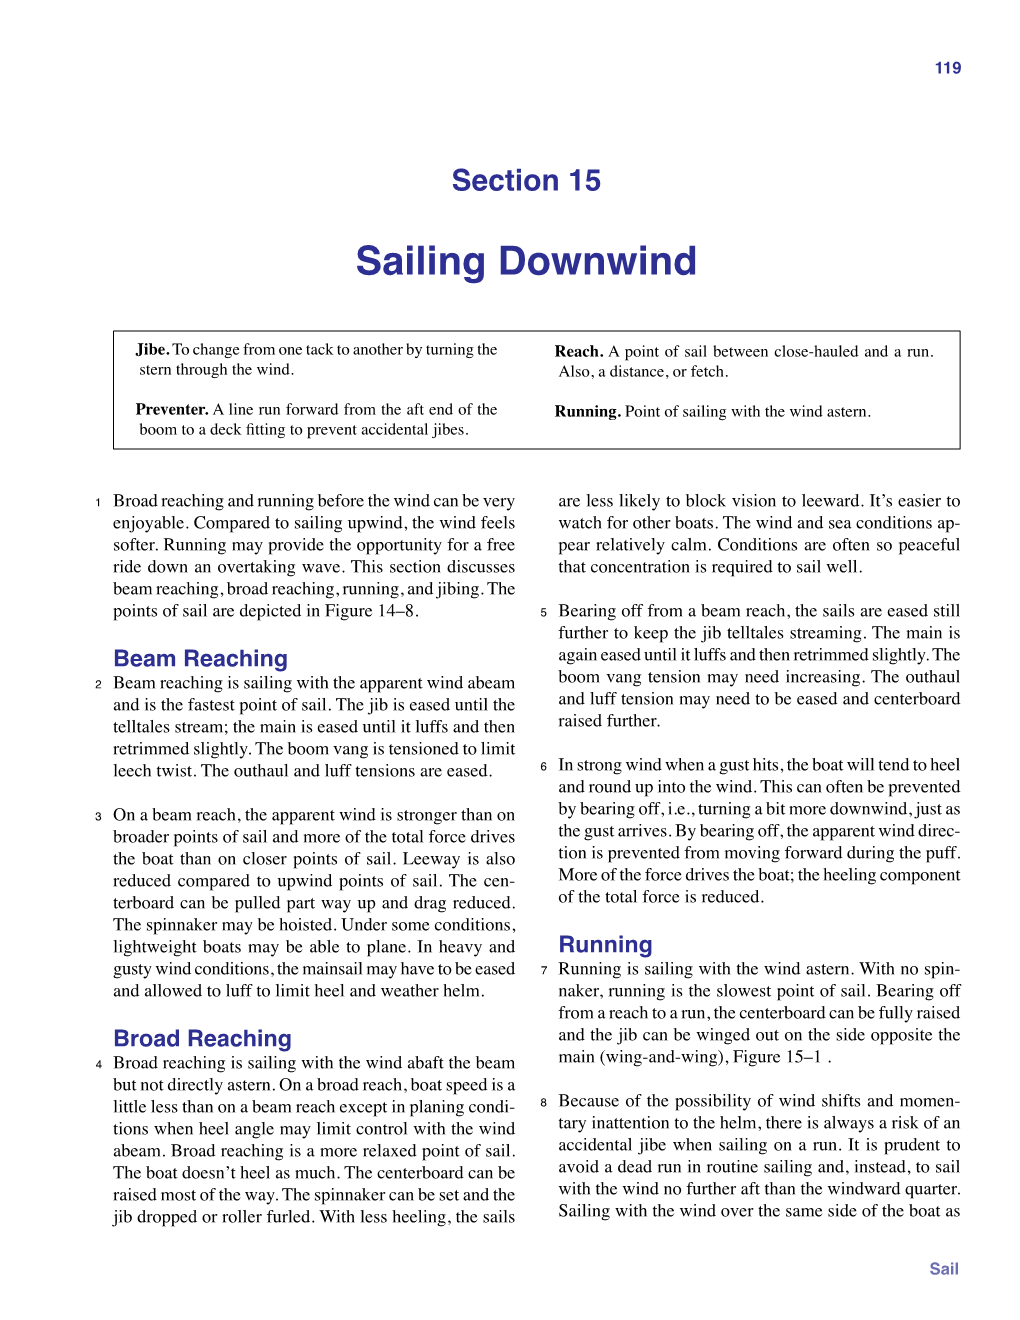 Sailing Downwind 119